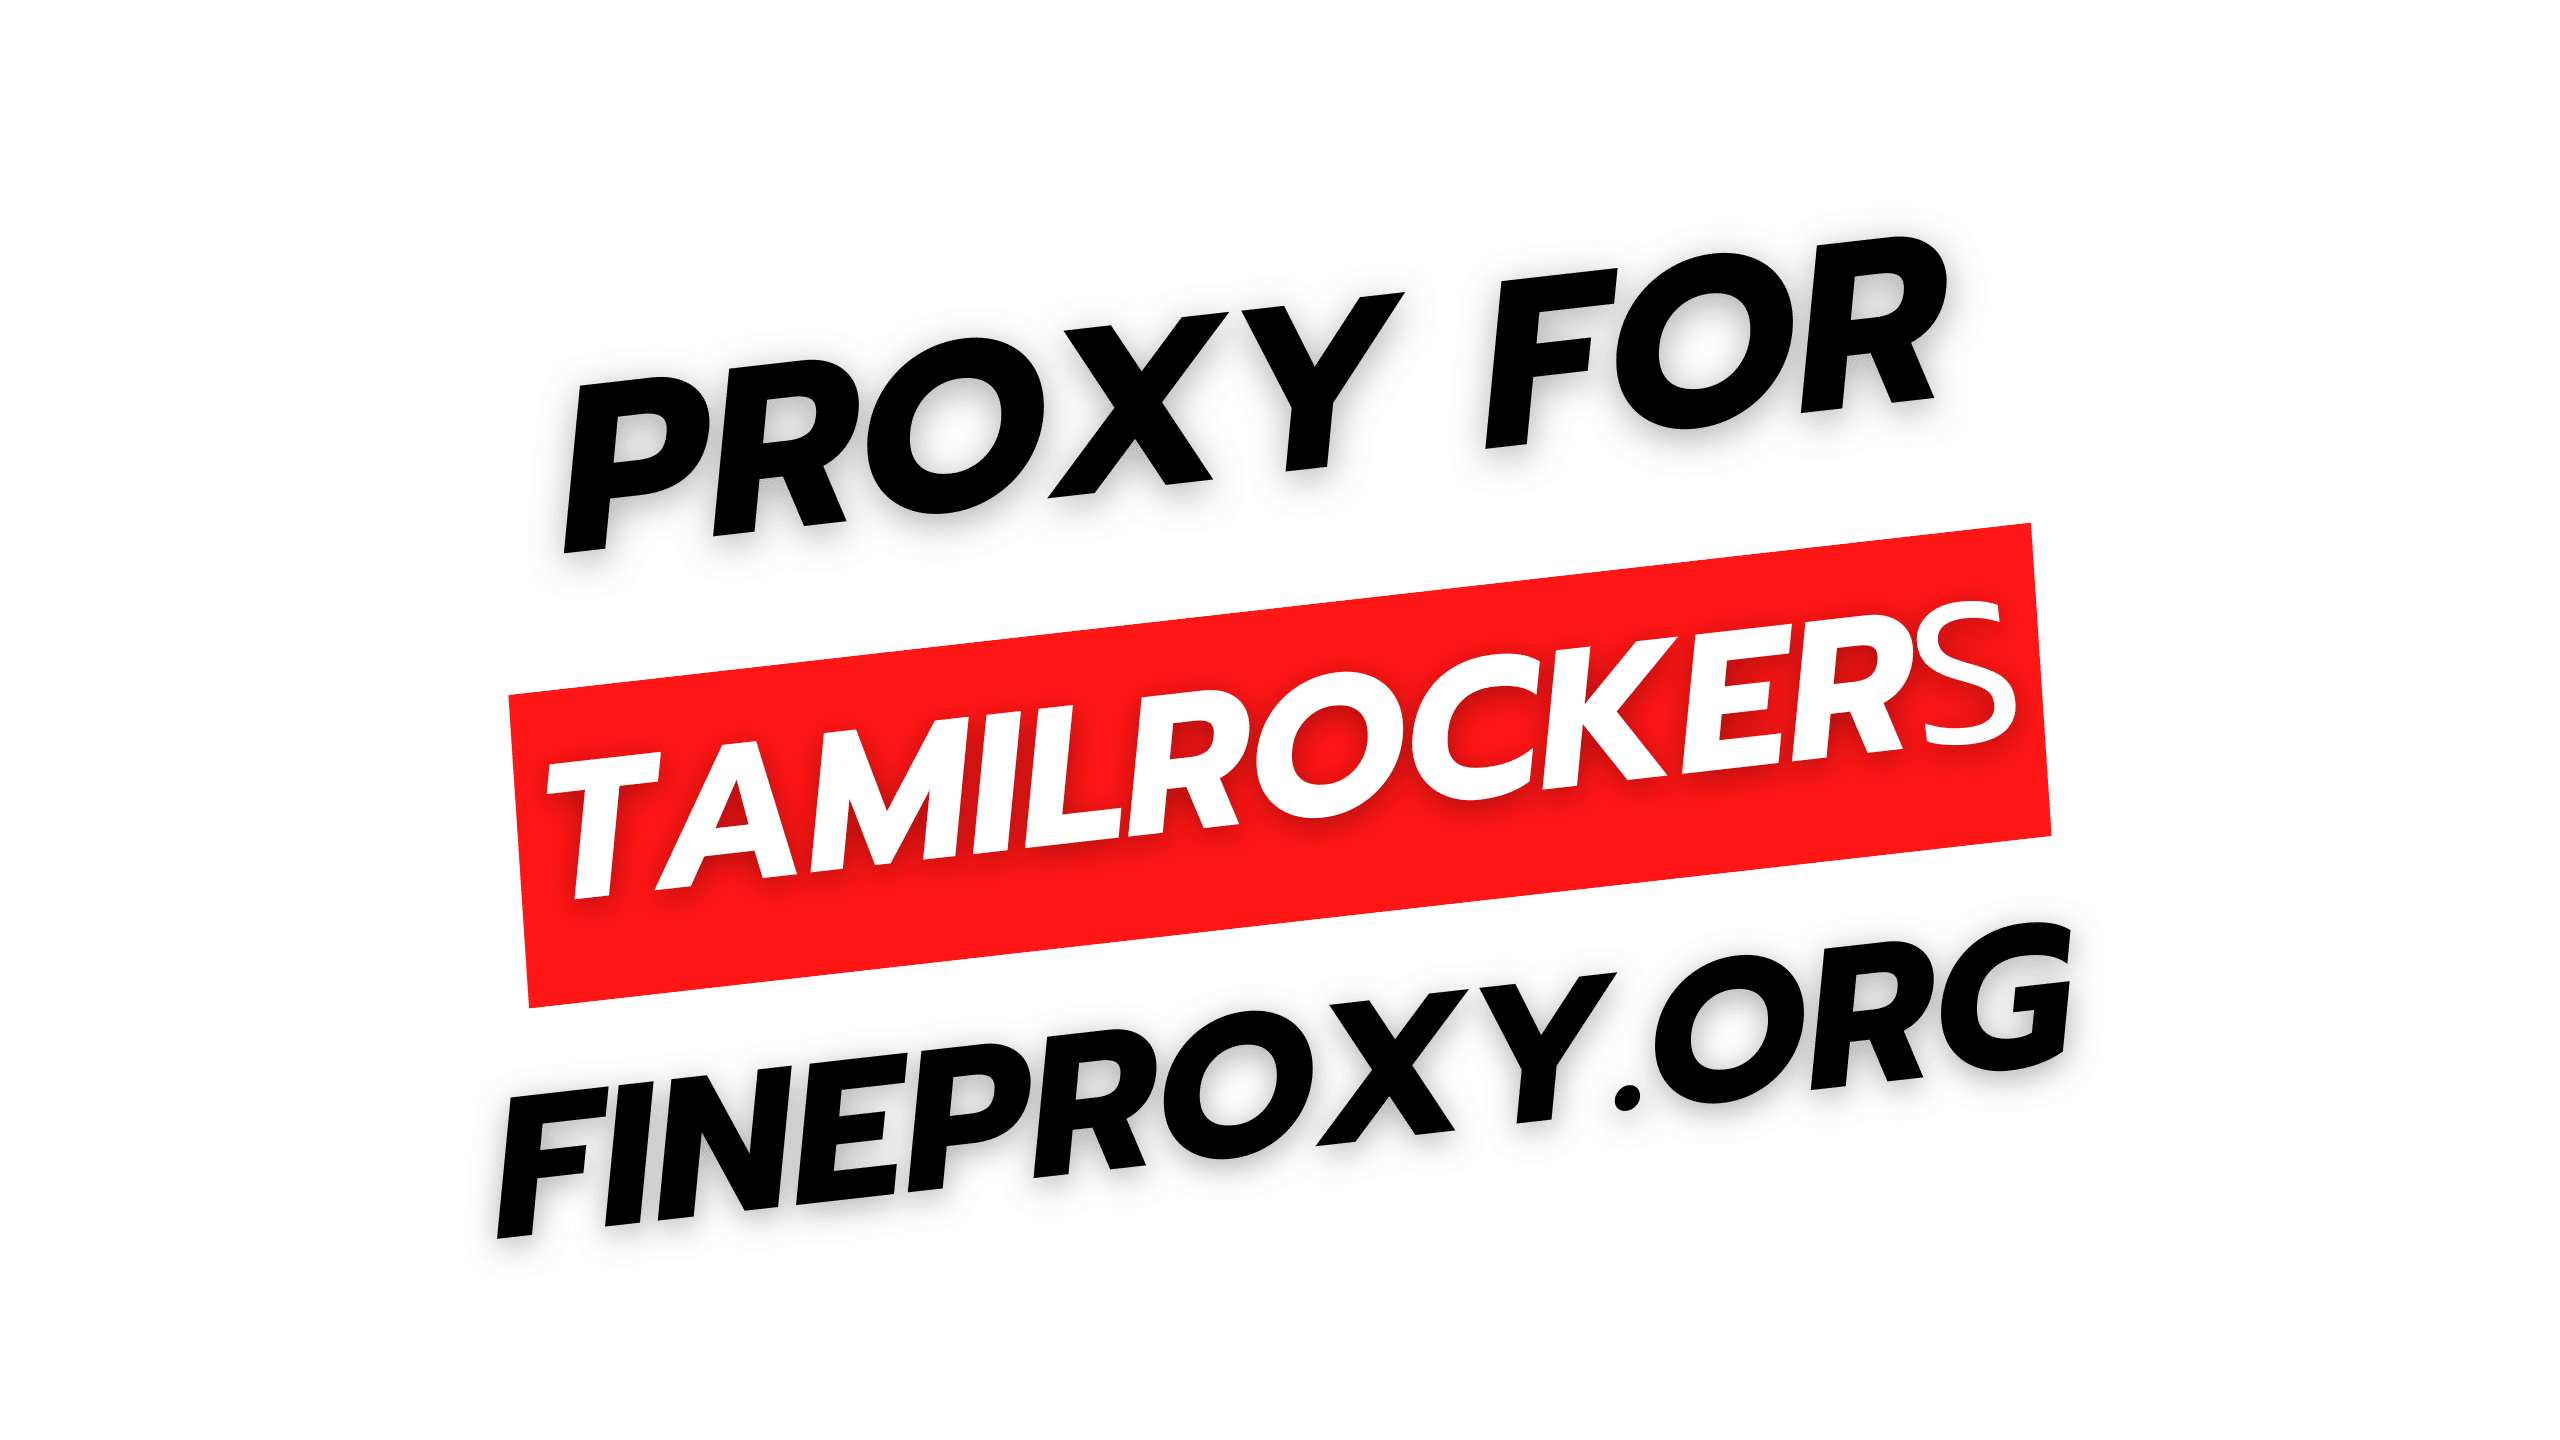 Rockers tamouls